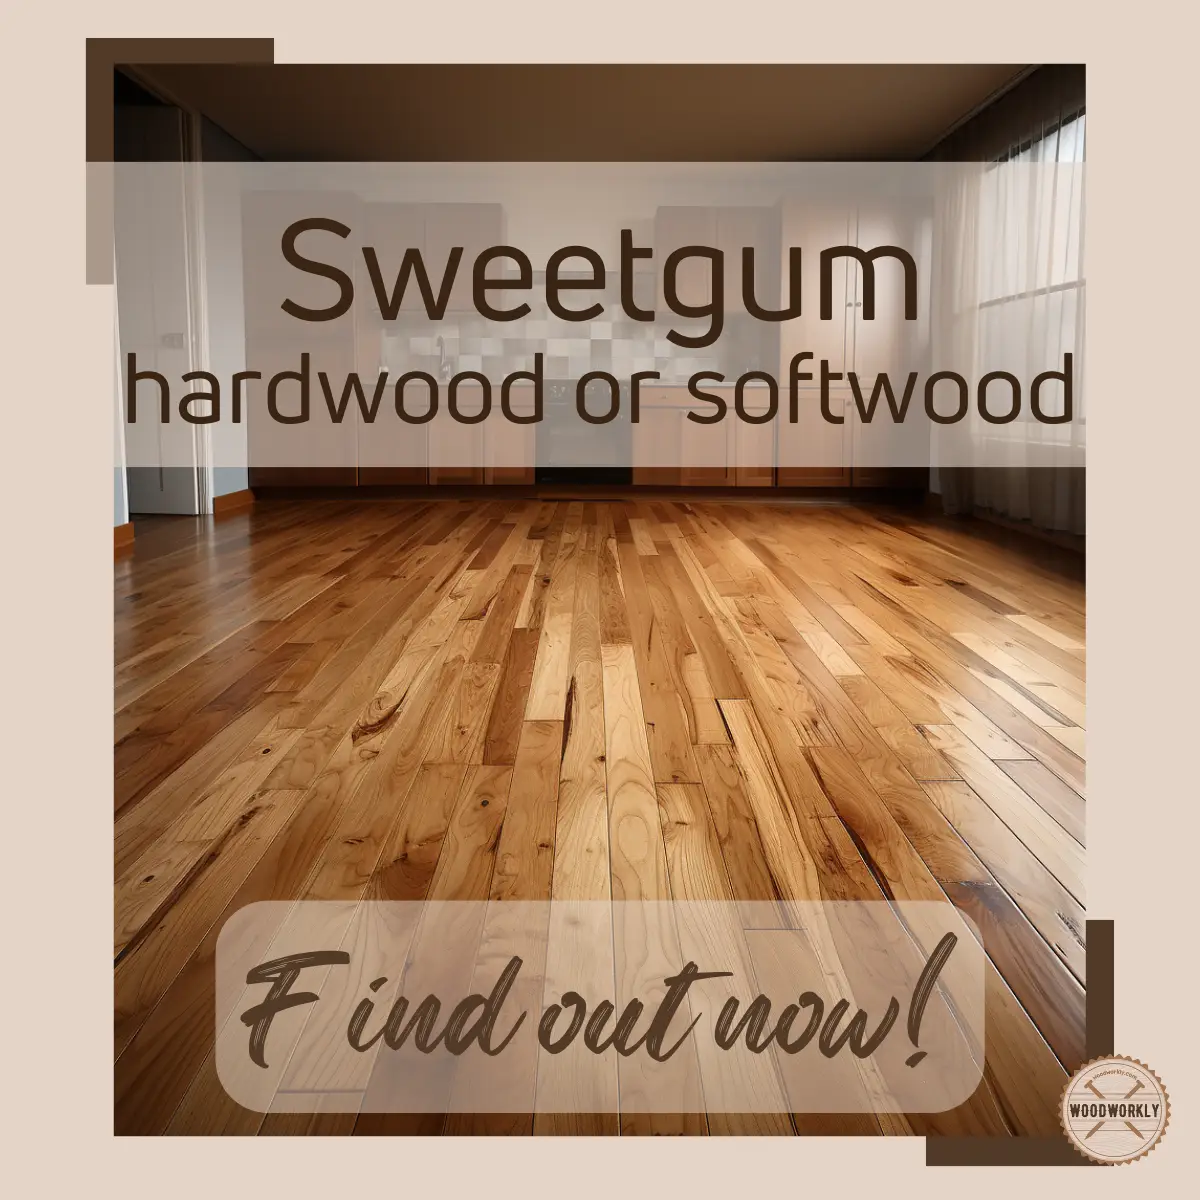 Is Sweet Gum A Hardwood